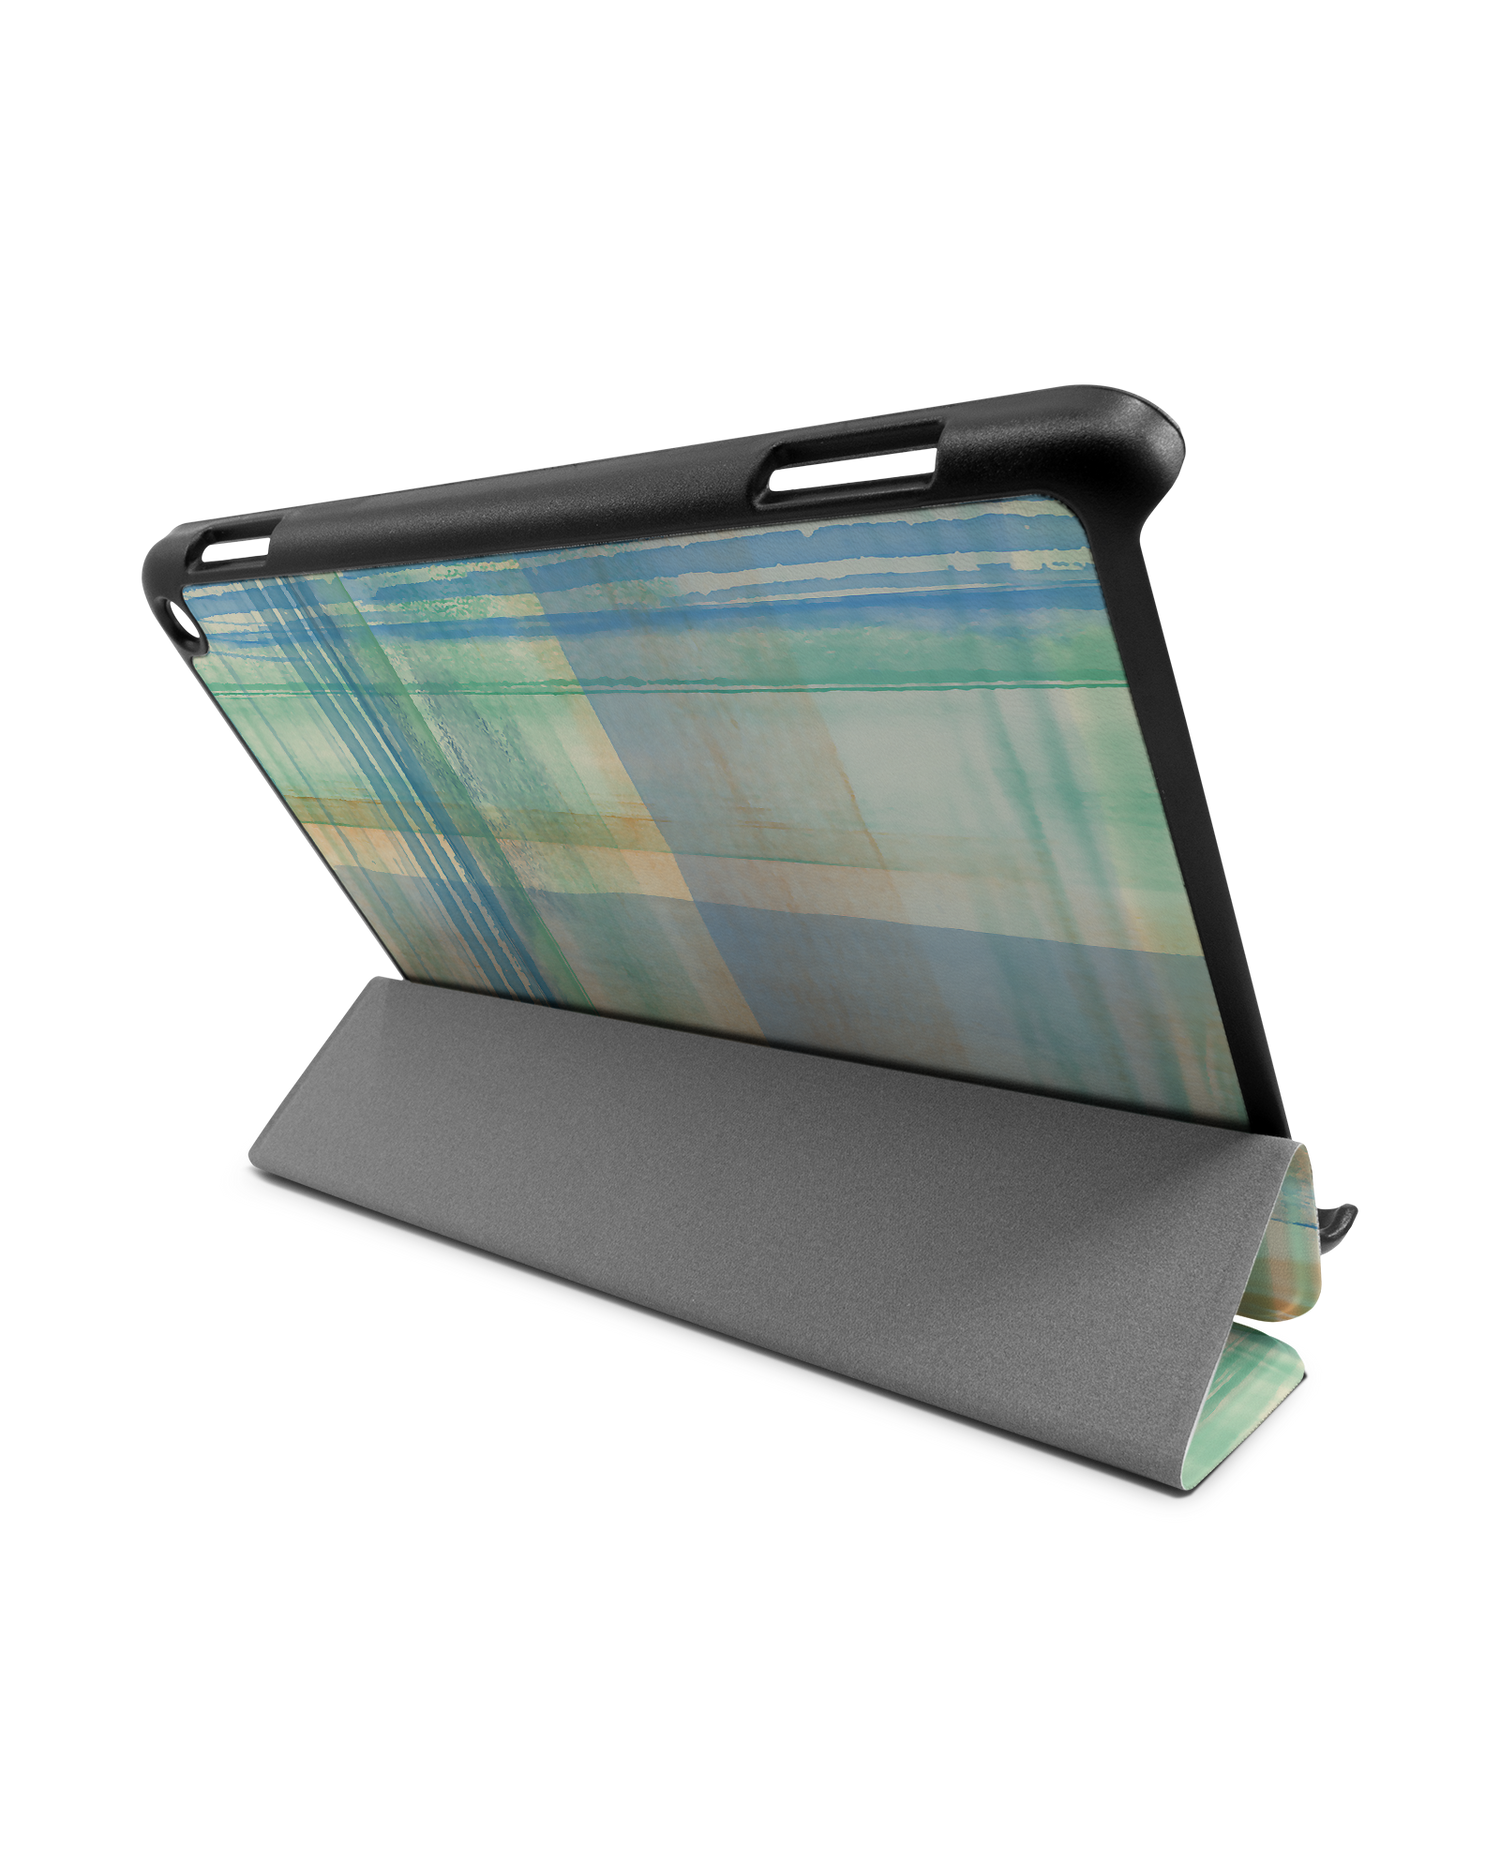 Washed Out Plaid Tablet Smart Case für Amazon Fire HD 8 (2022), Amazon Fire HD 8 Plus (2022), Amazon Fire HD 8 (2020), Amazon Fire HD 8 Plus (2020): Aufgestellt im Querformat